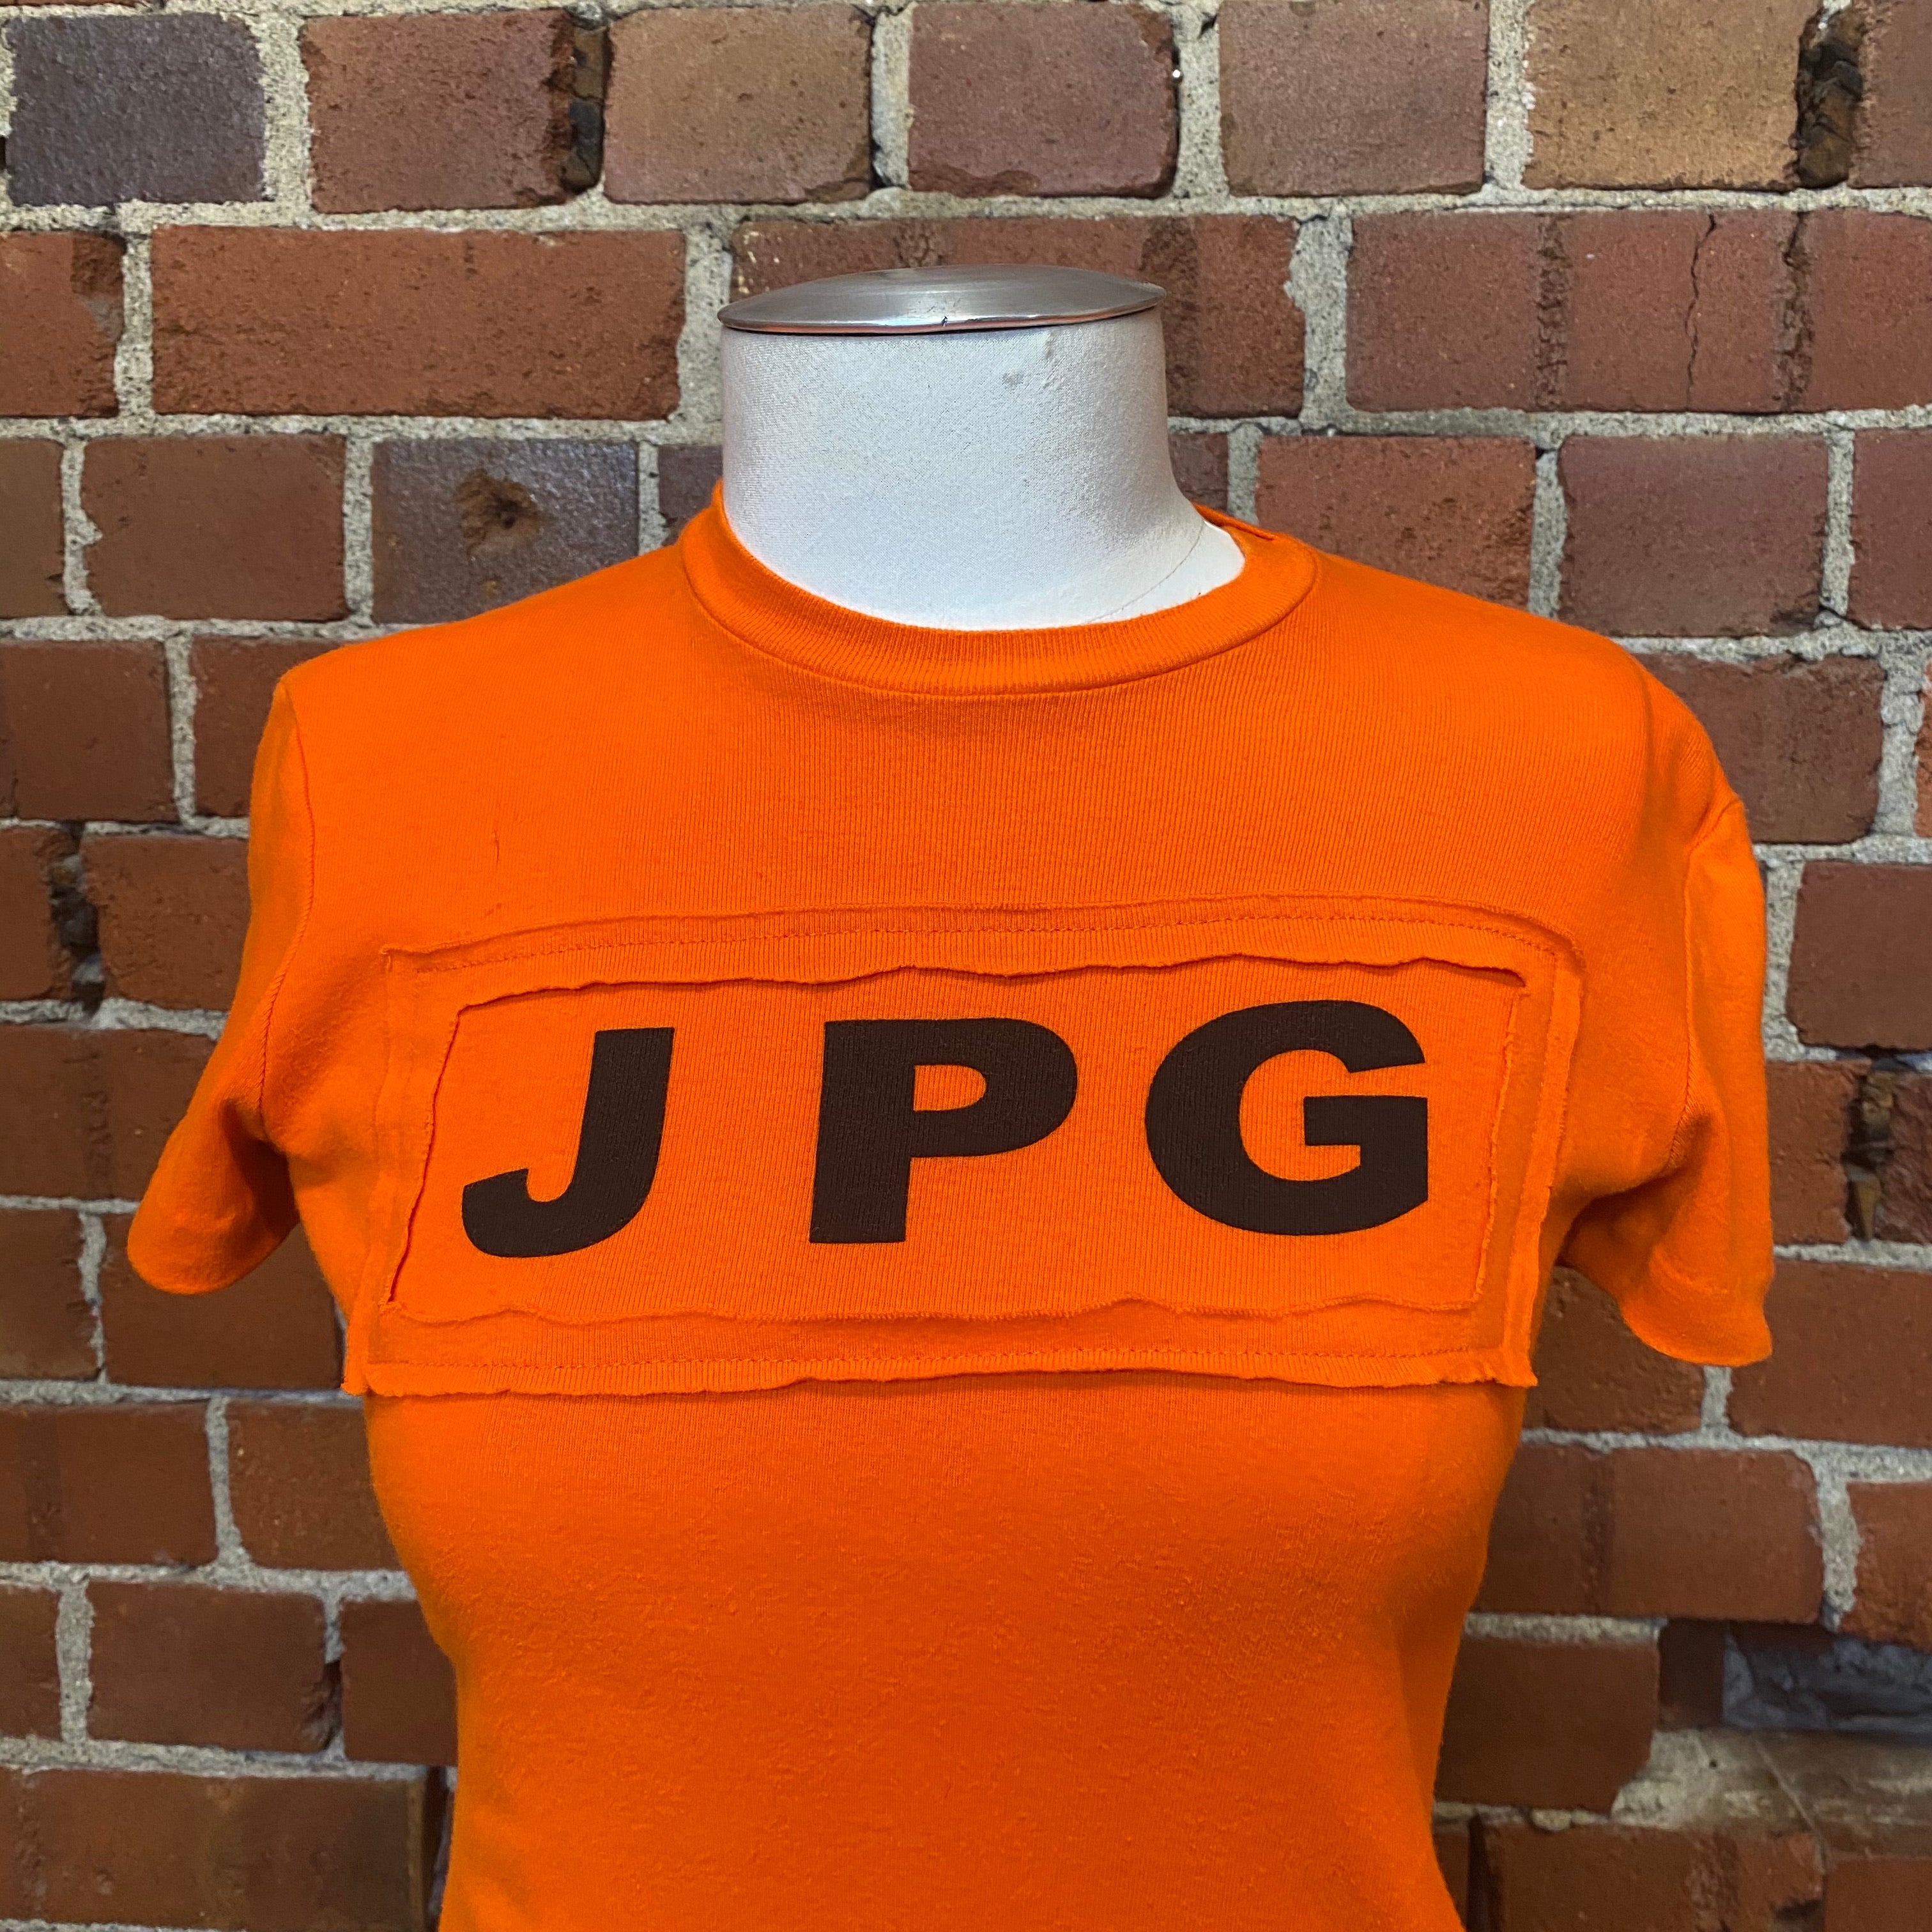 JPG 1990s t-shirt